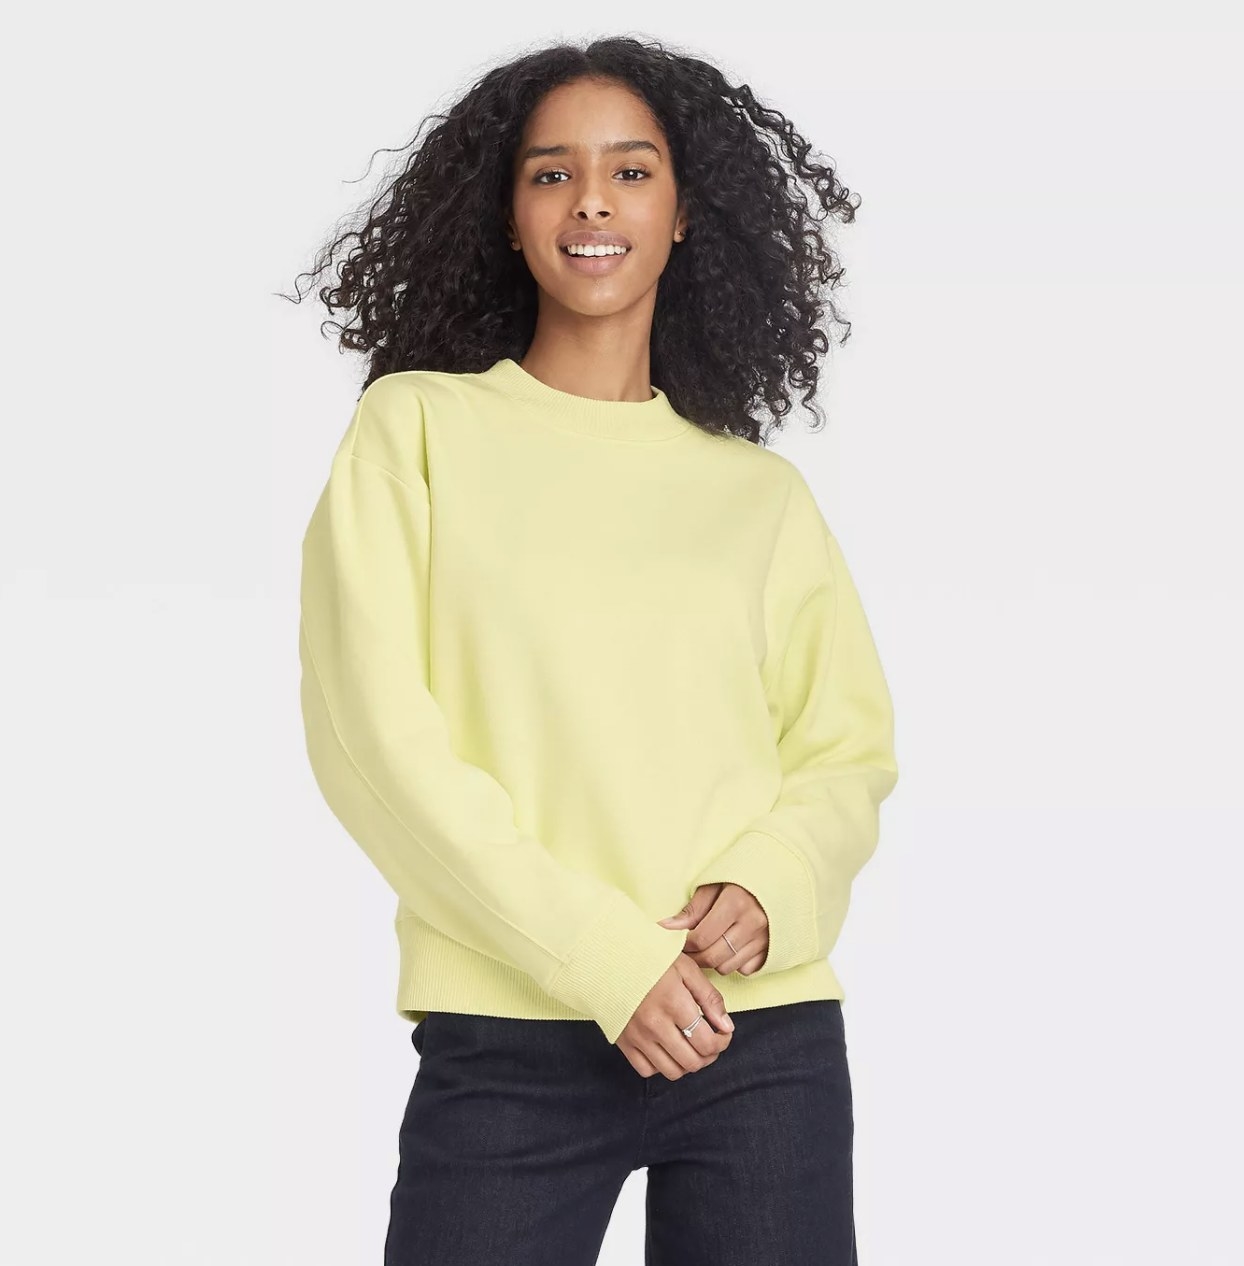 the sweatshirt in yellow